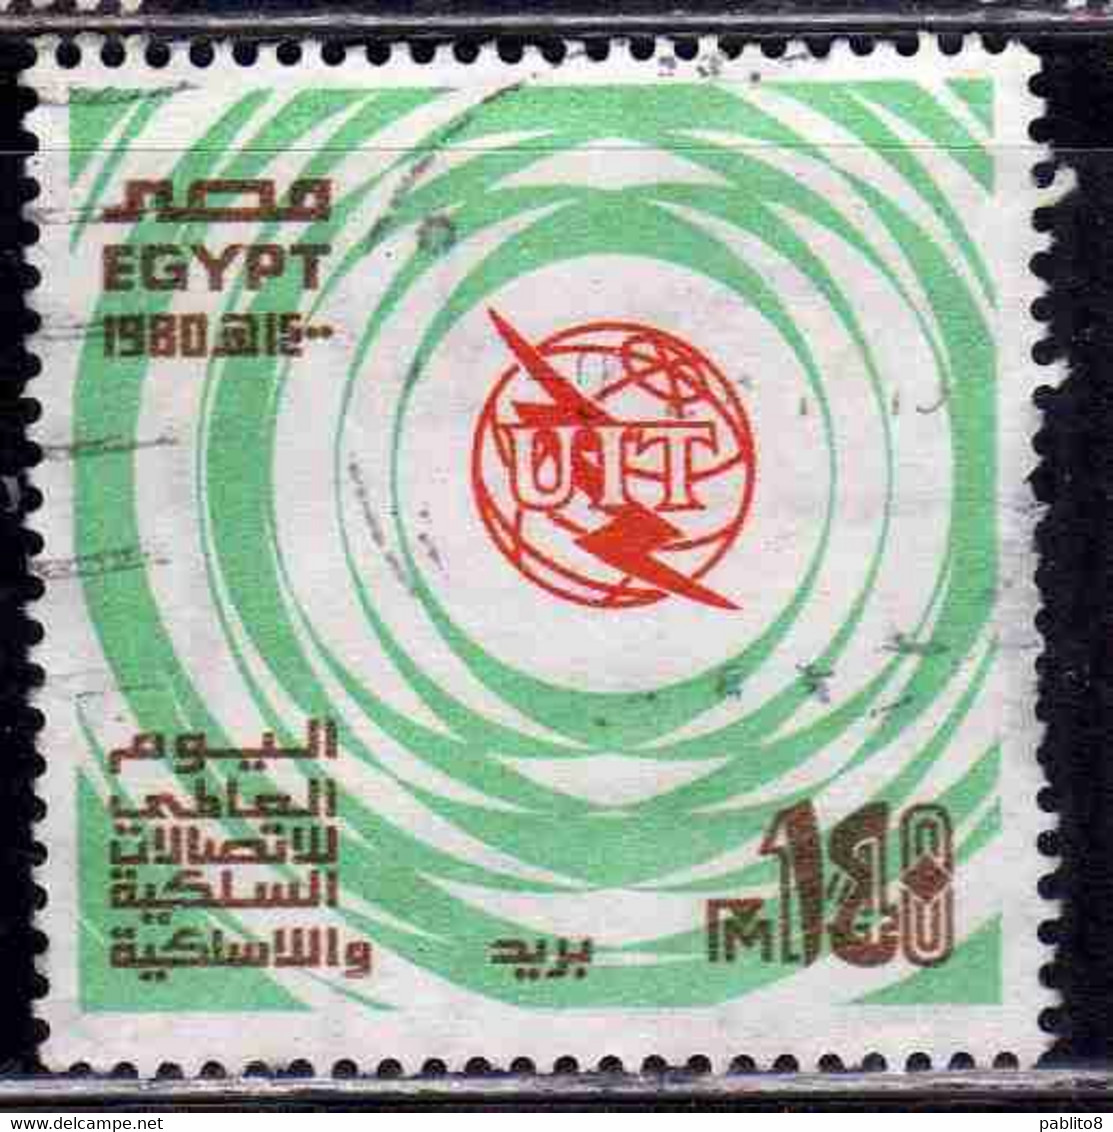 UAR EGYPT EGITTO 1980 UN ONU DAY INTERNATIONAL TELECOMMUNICATIONS DAY UNION 140m USED USATO OBLITERE' - Gebraucht